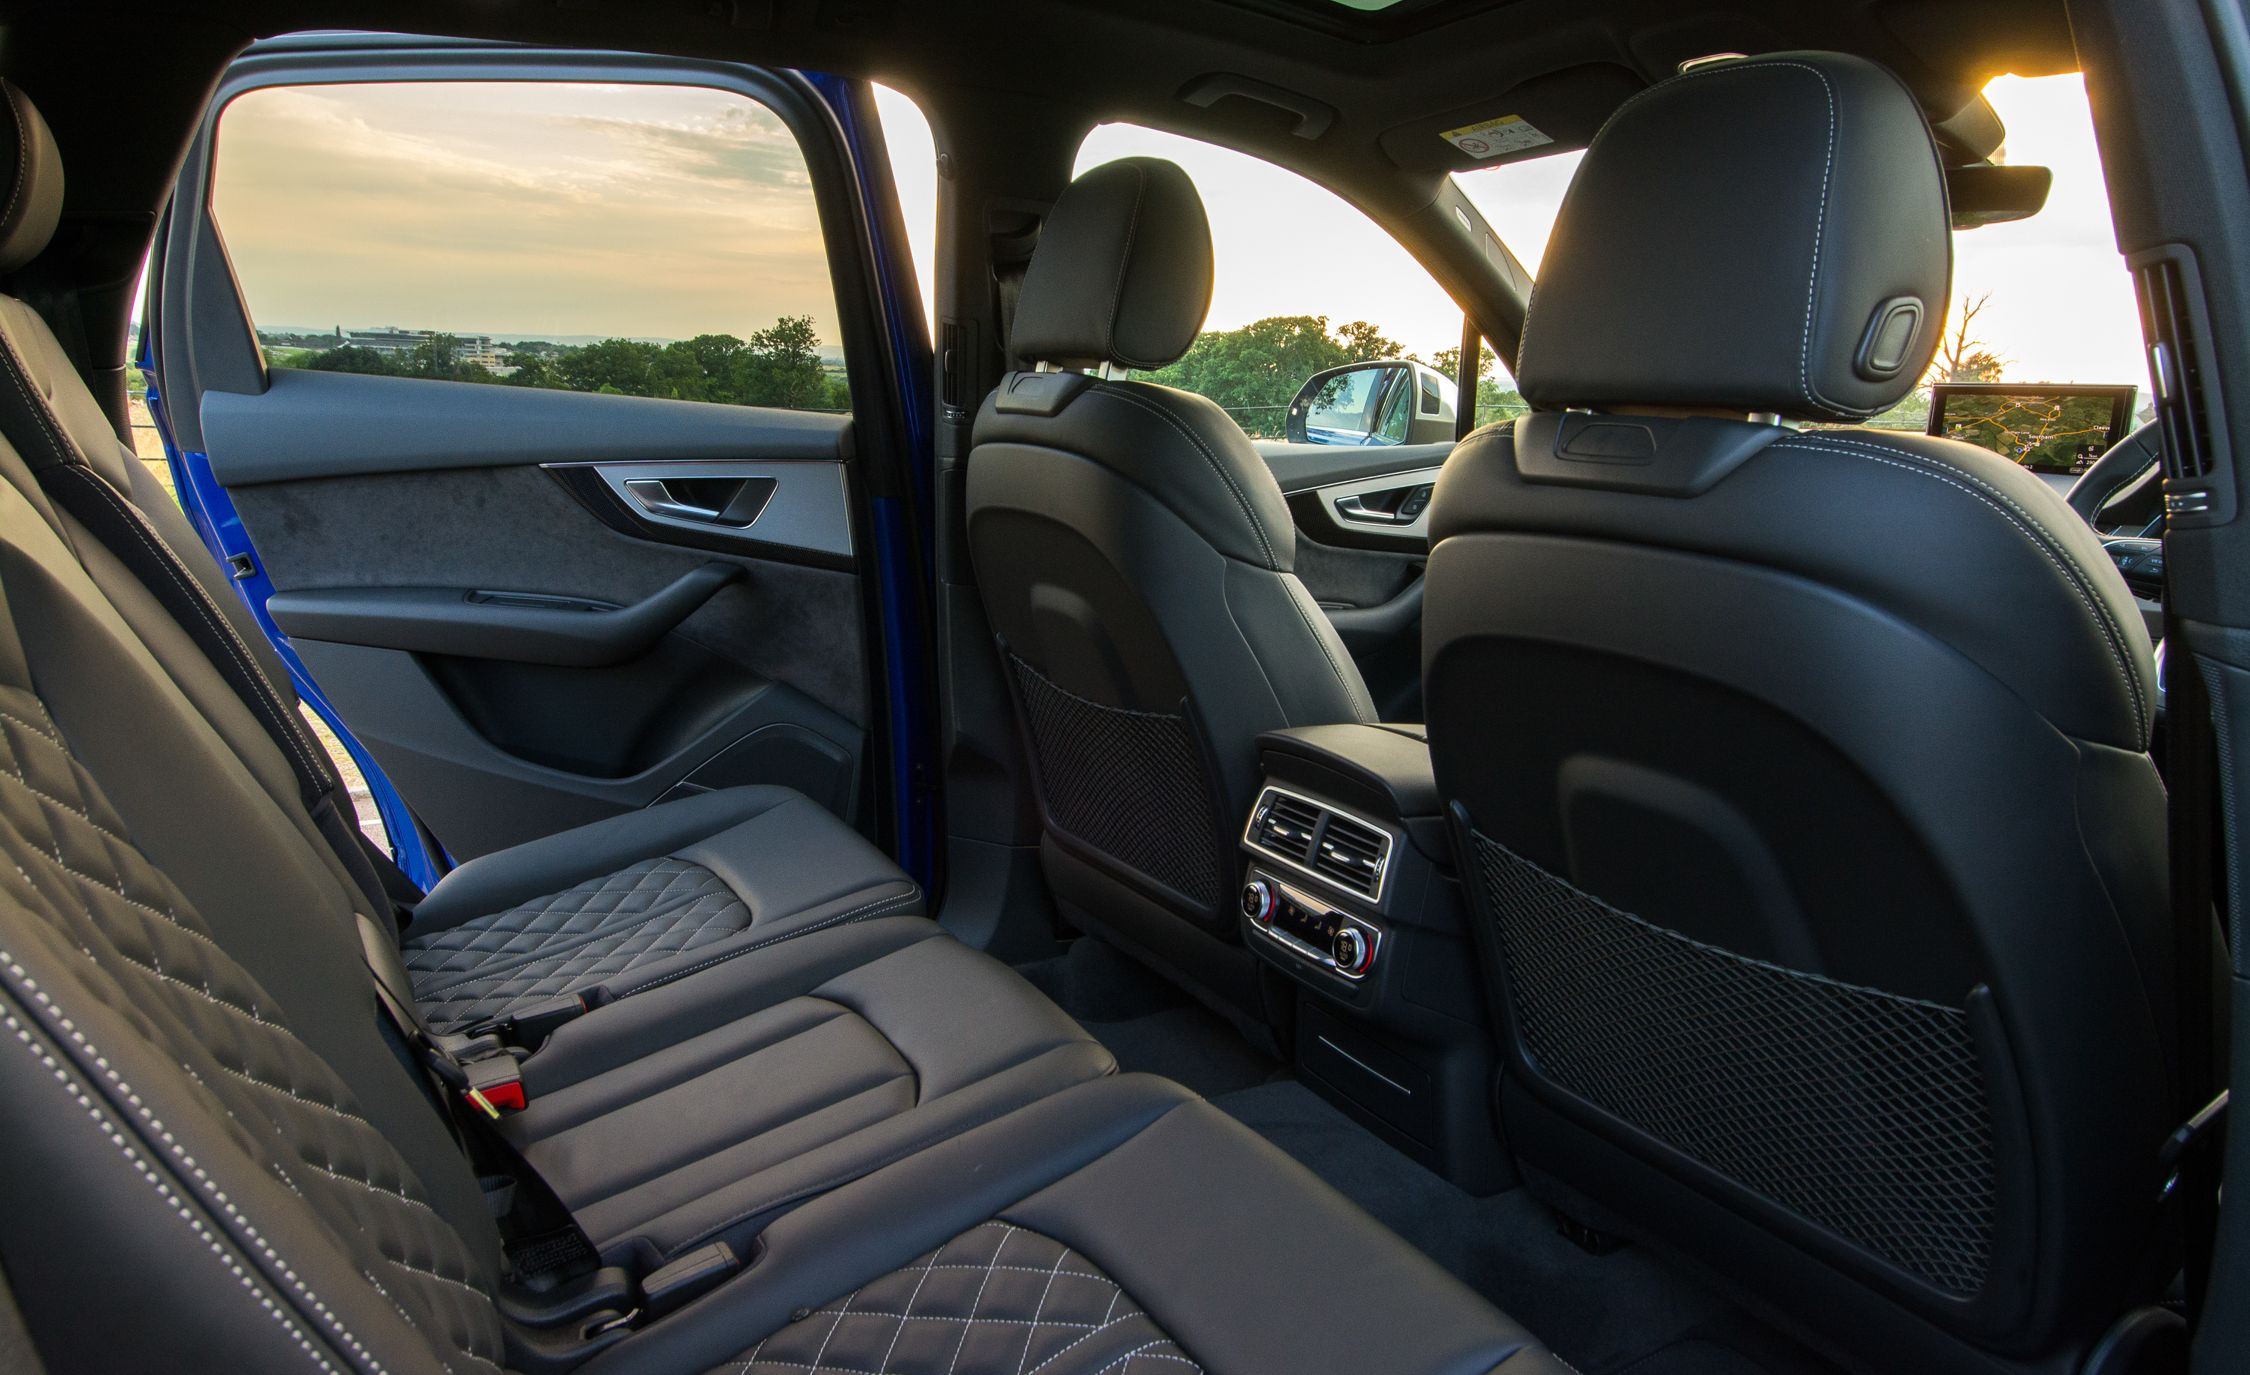 2017 Audi Sq7 Interior Seats Rear (View 9 of 15)